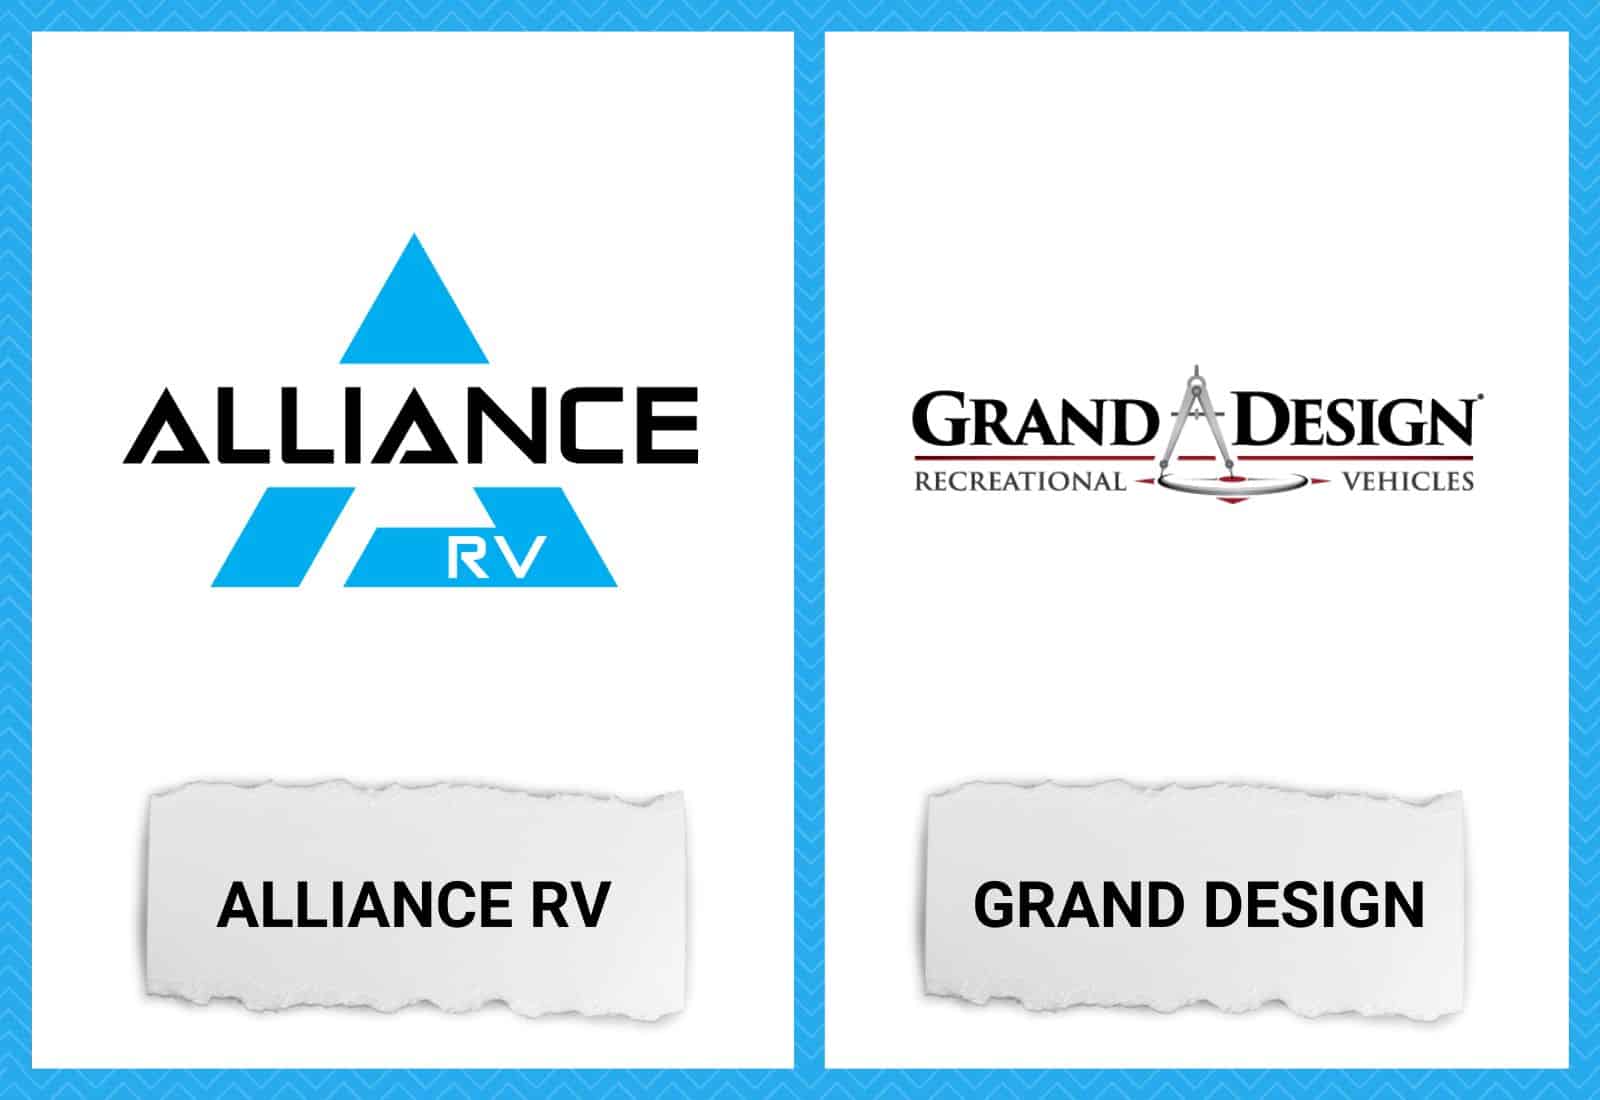 Alliance RV vs Grand Design